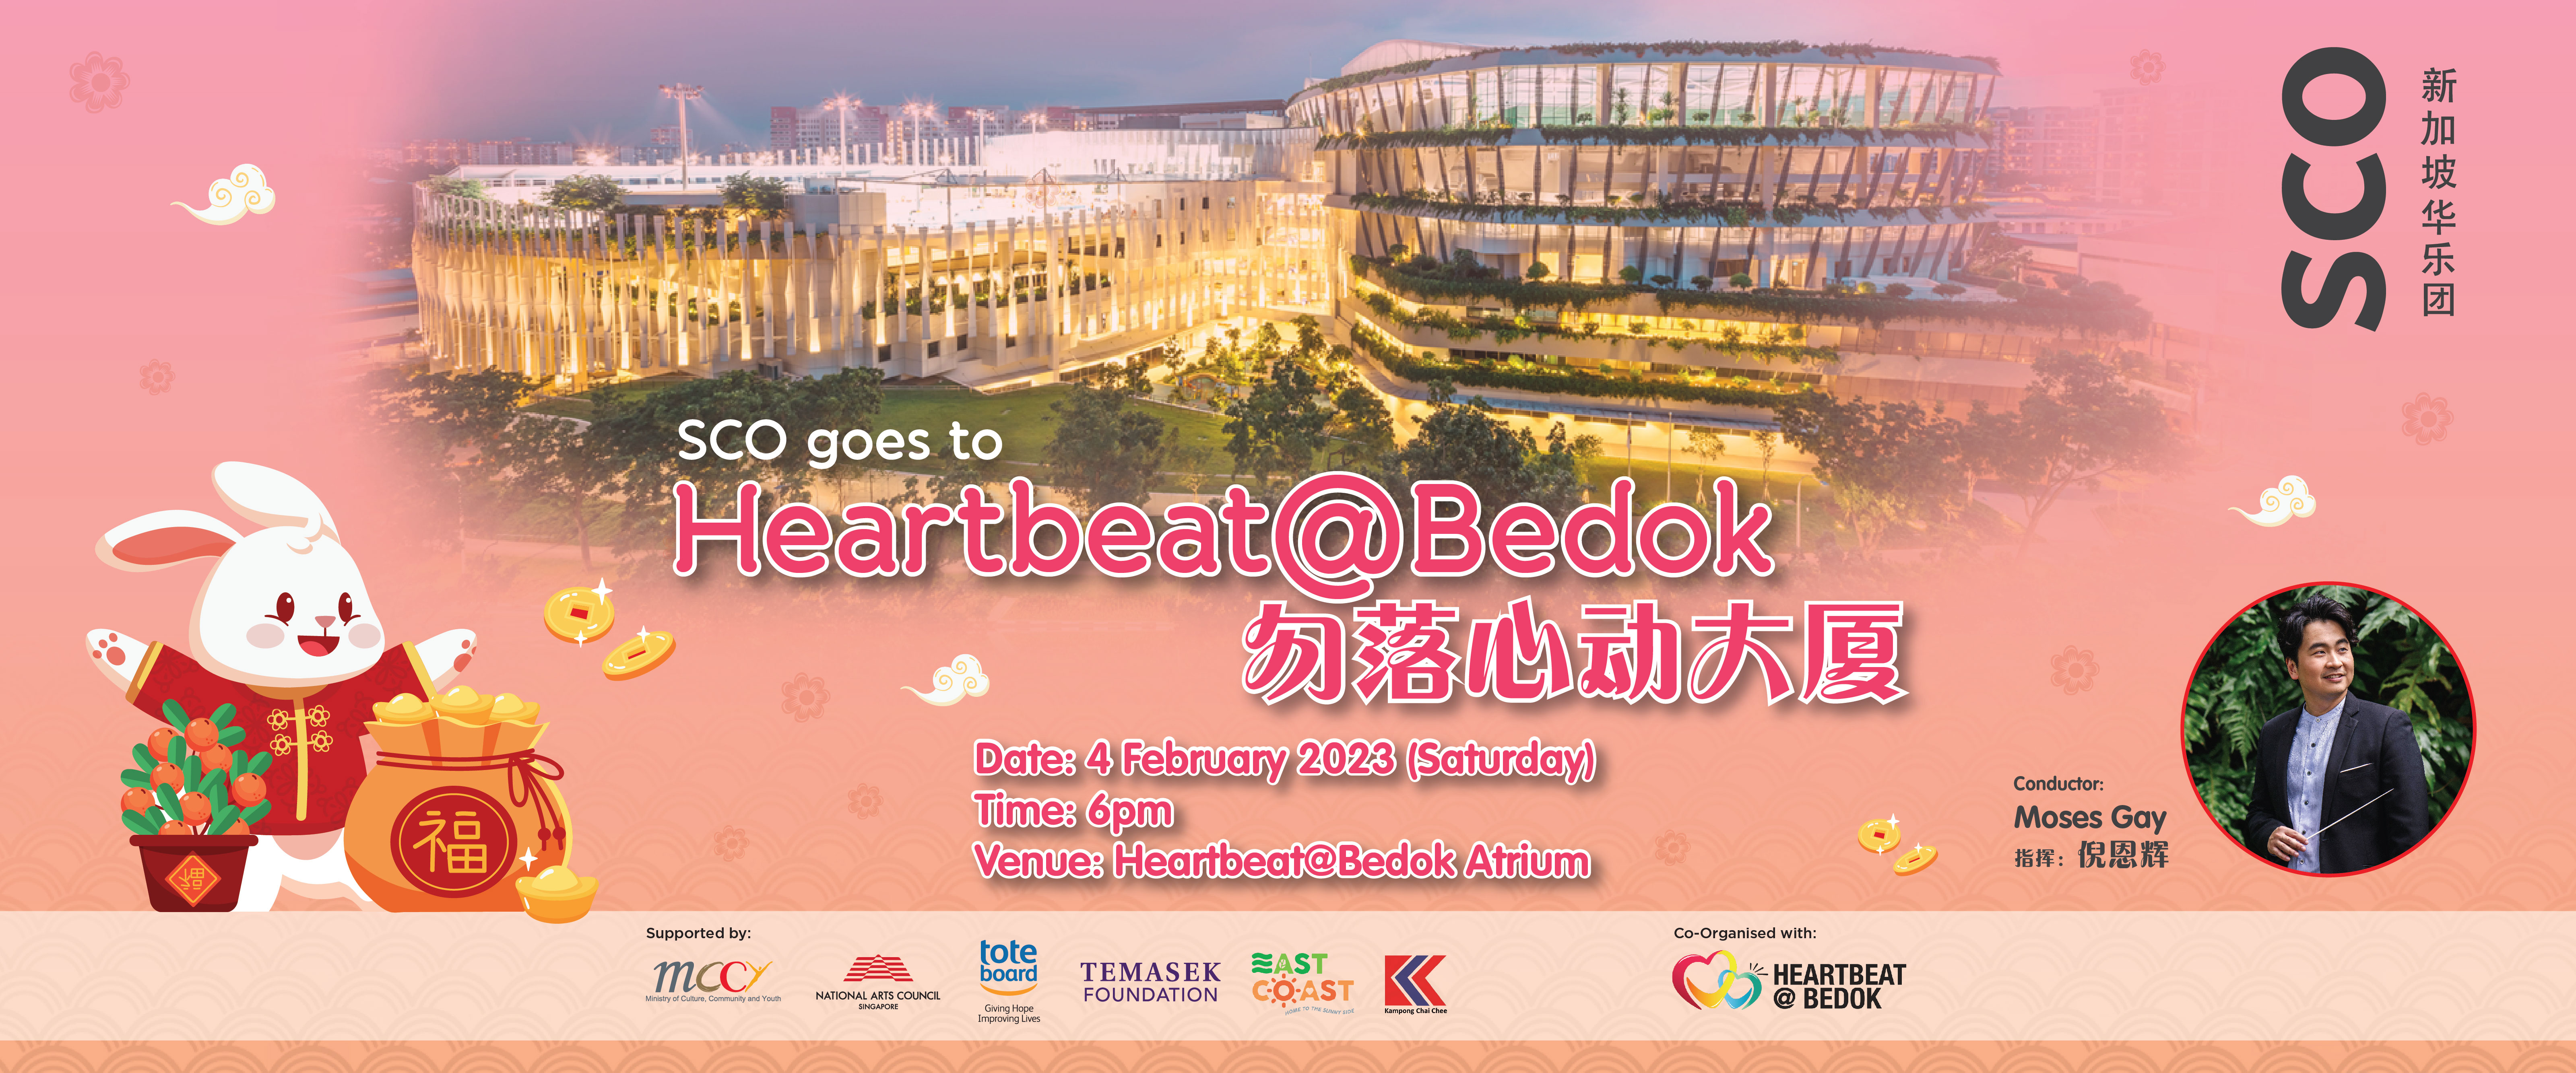 SCO_HeartbeatBedok_CNY_1920x800ai-01 SCO Goes to Heartbeat@Bedok